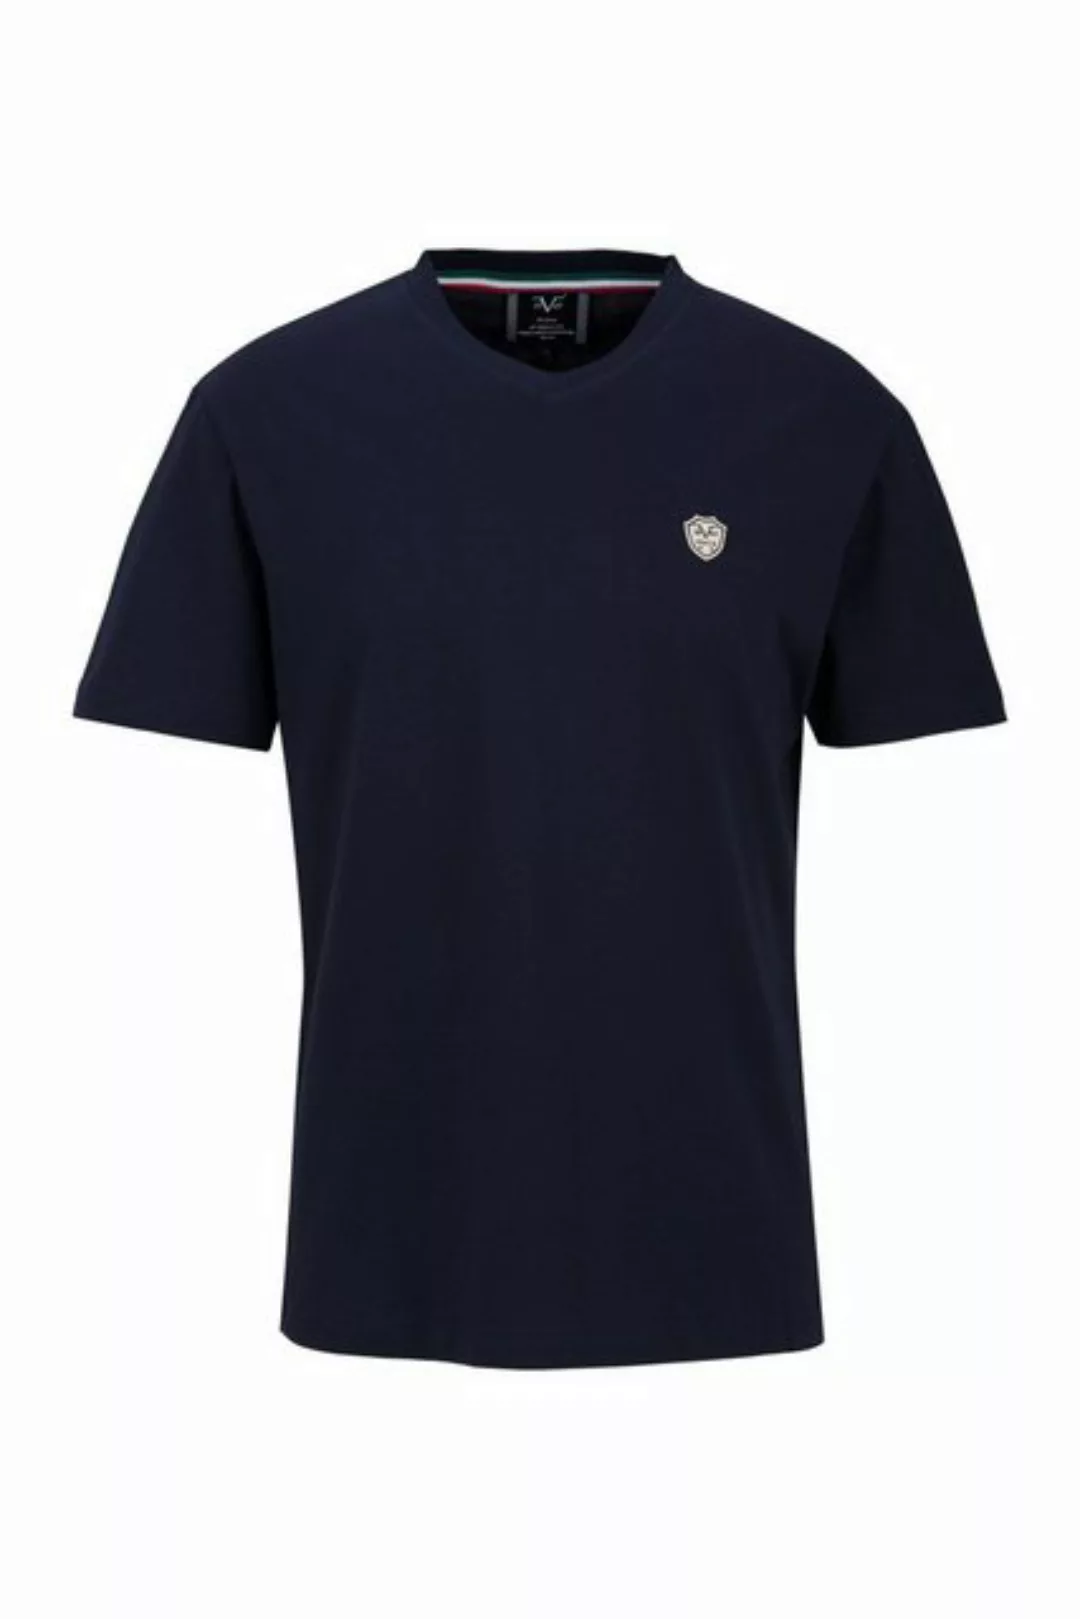 19V69 Italia by Versace T-Shirt Toni Schield günstig online kaufen